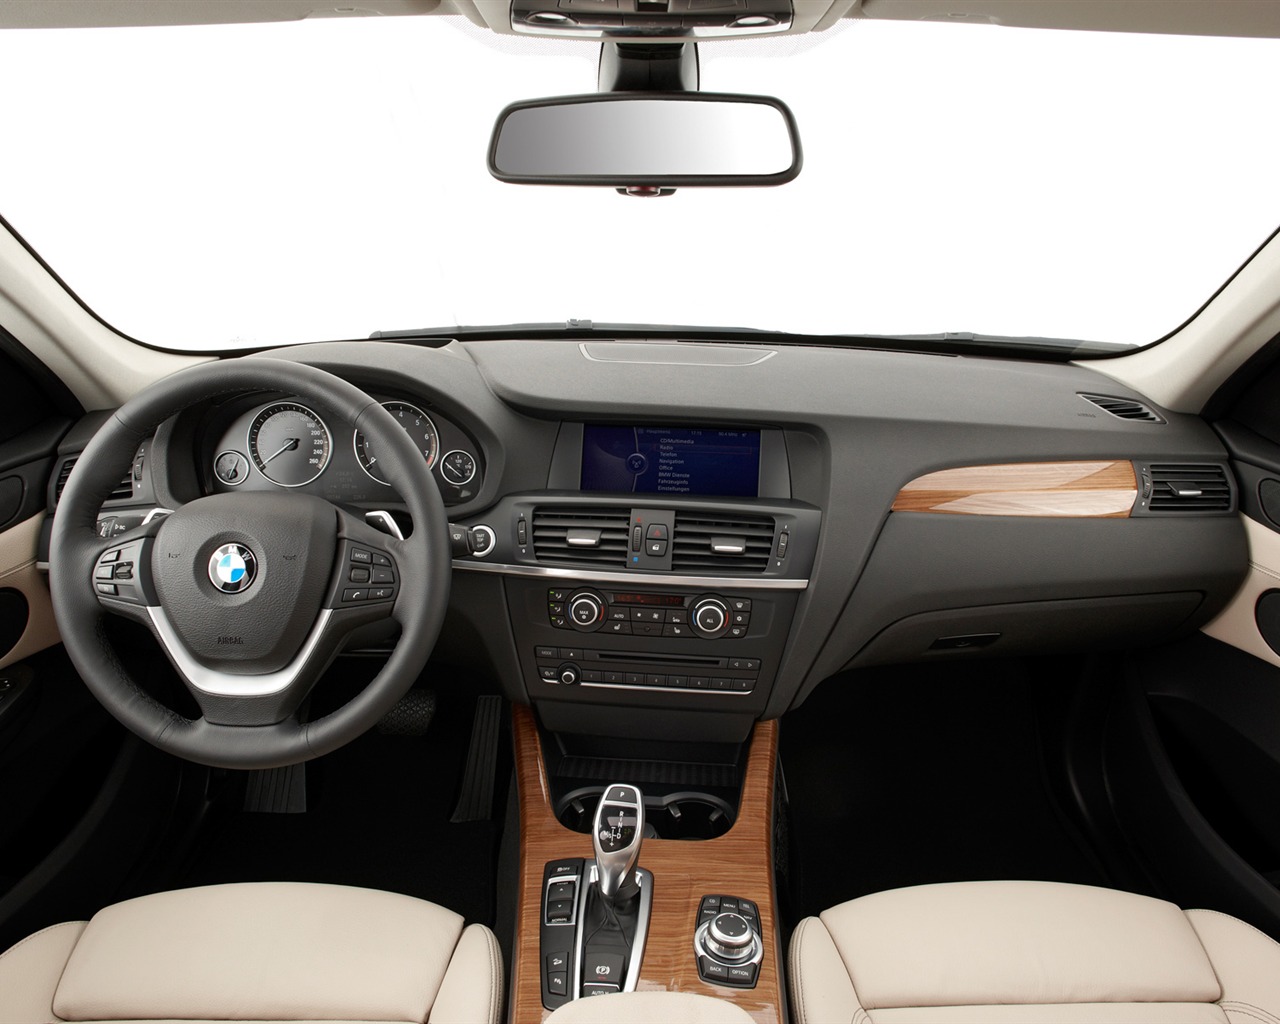 BMW X3 xDrive35i - 2010 宝马(一)39 - 1280x1024